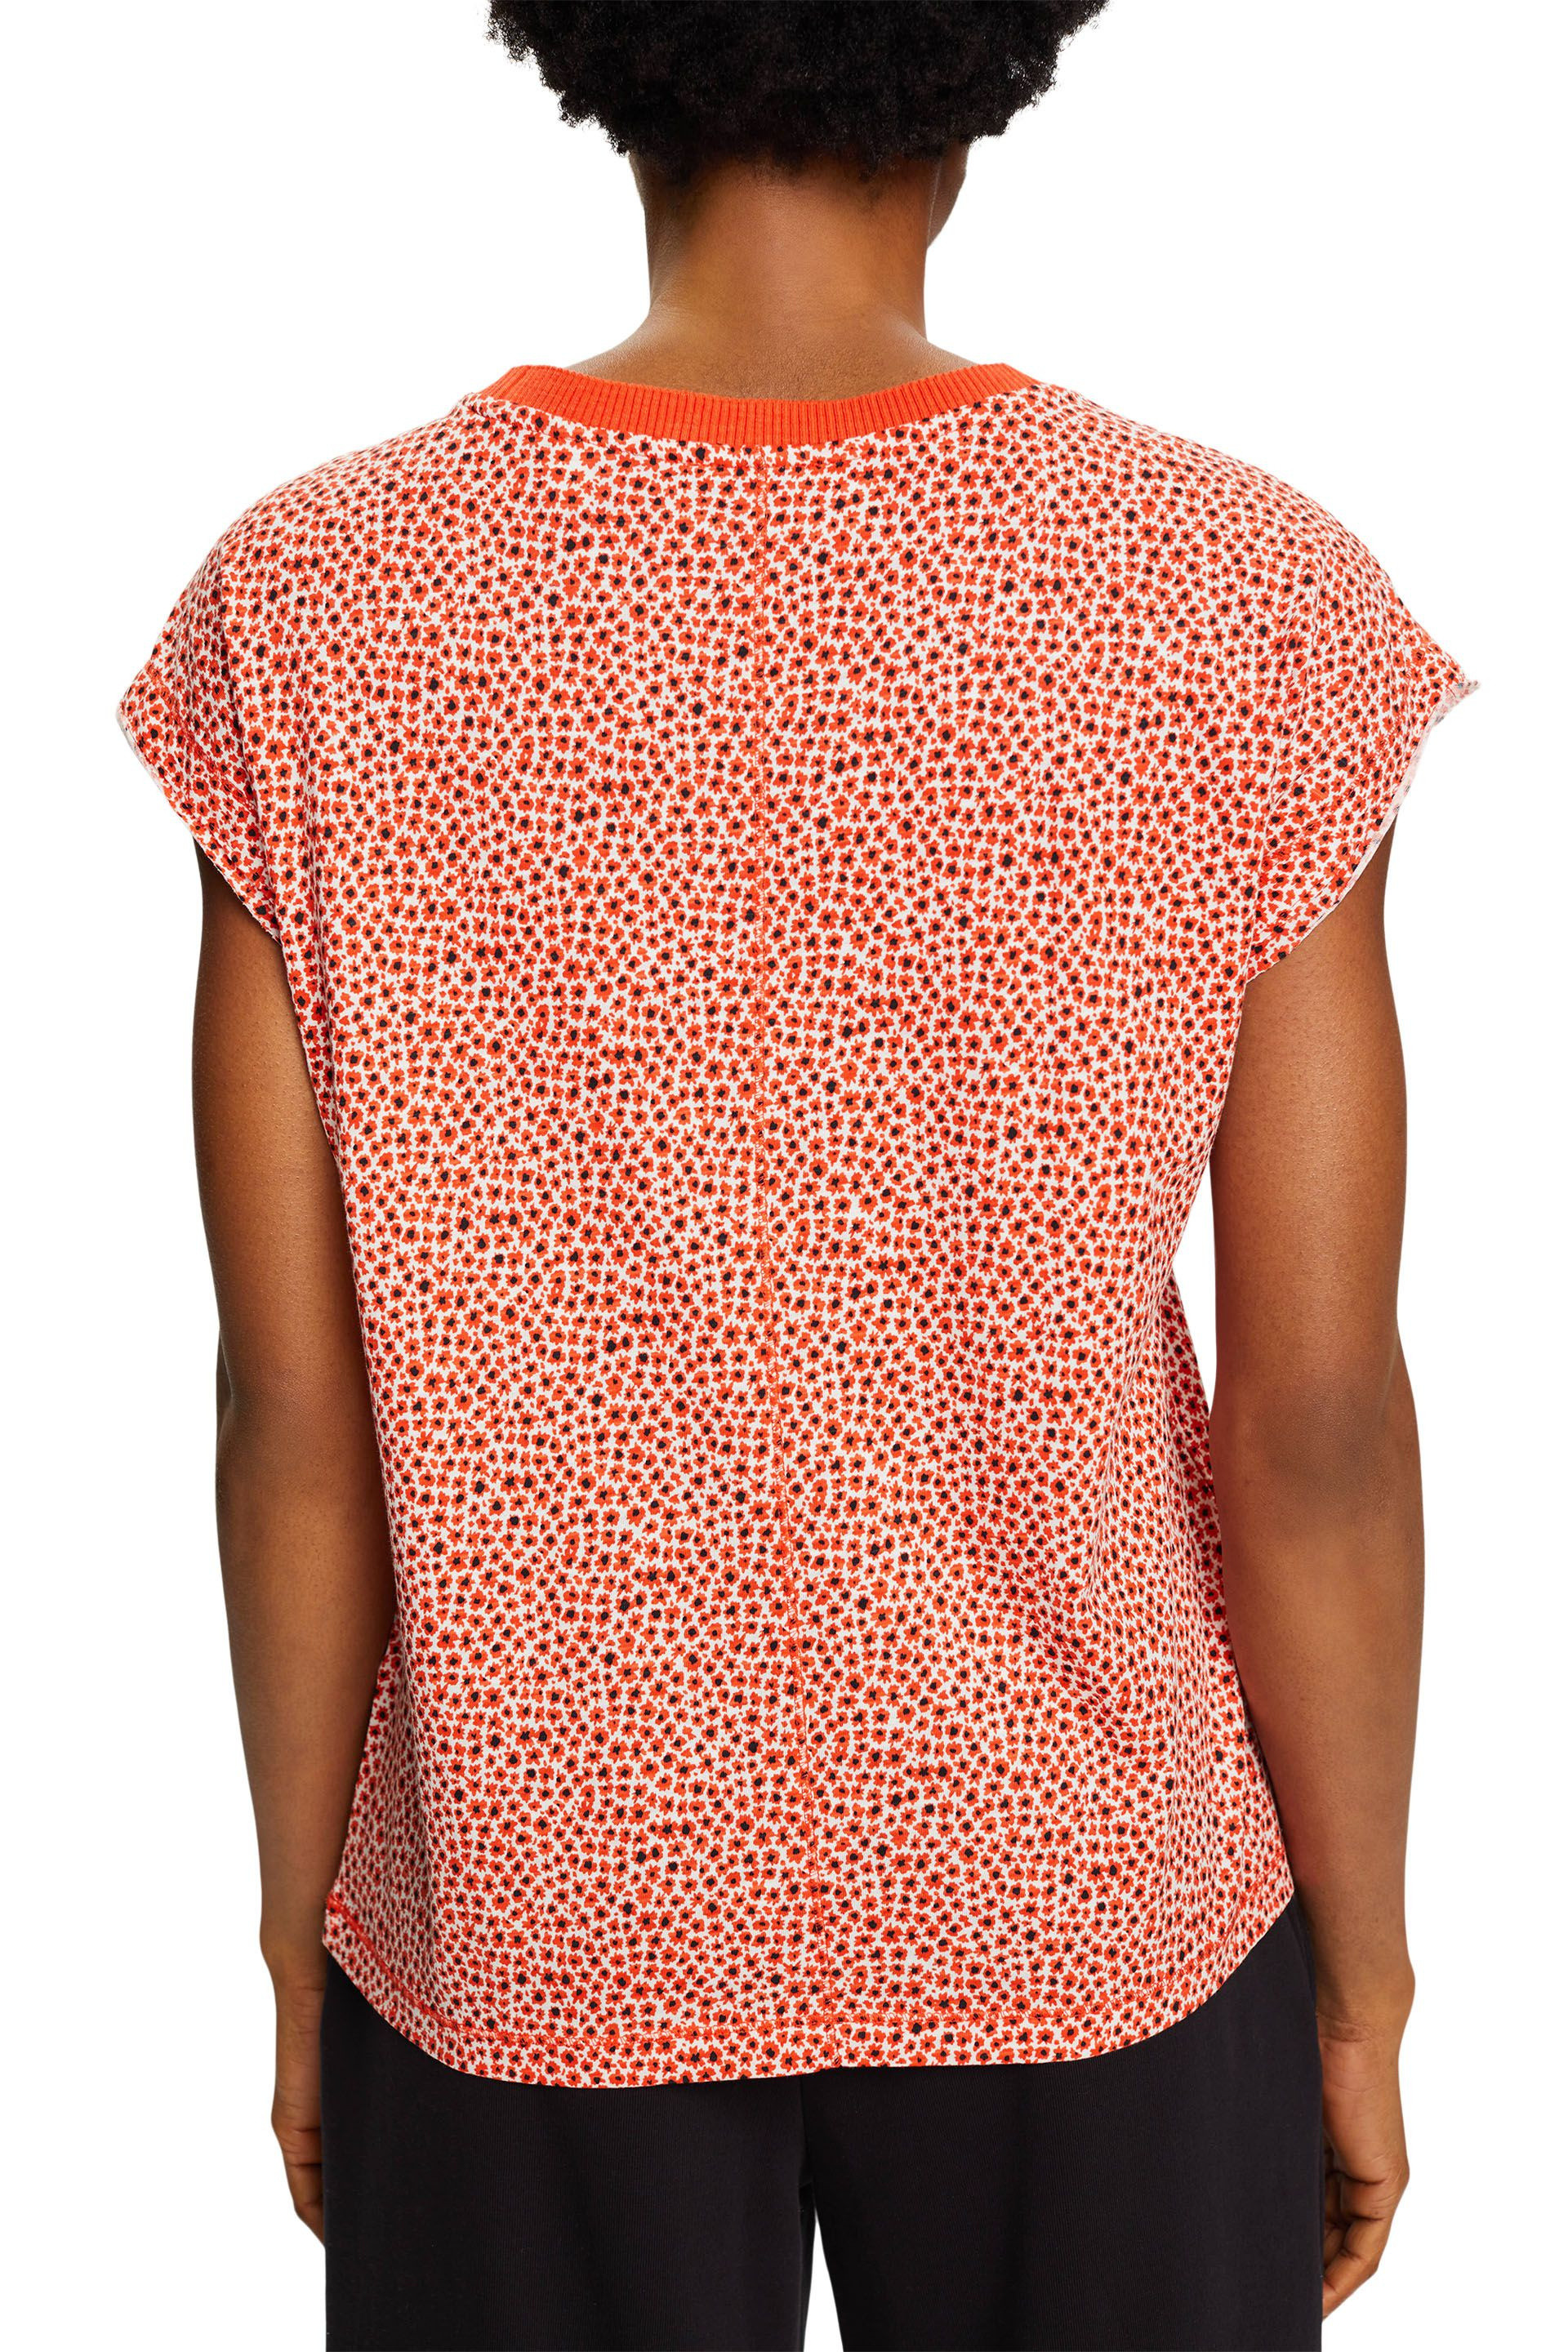 Esprit - T-shirt con motivo floreale all over, Arancione, large image number 3